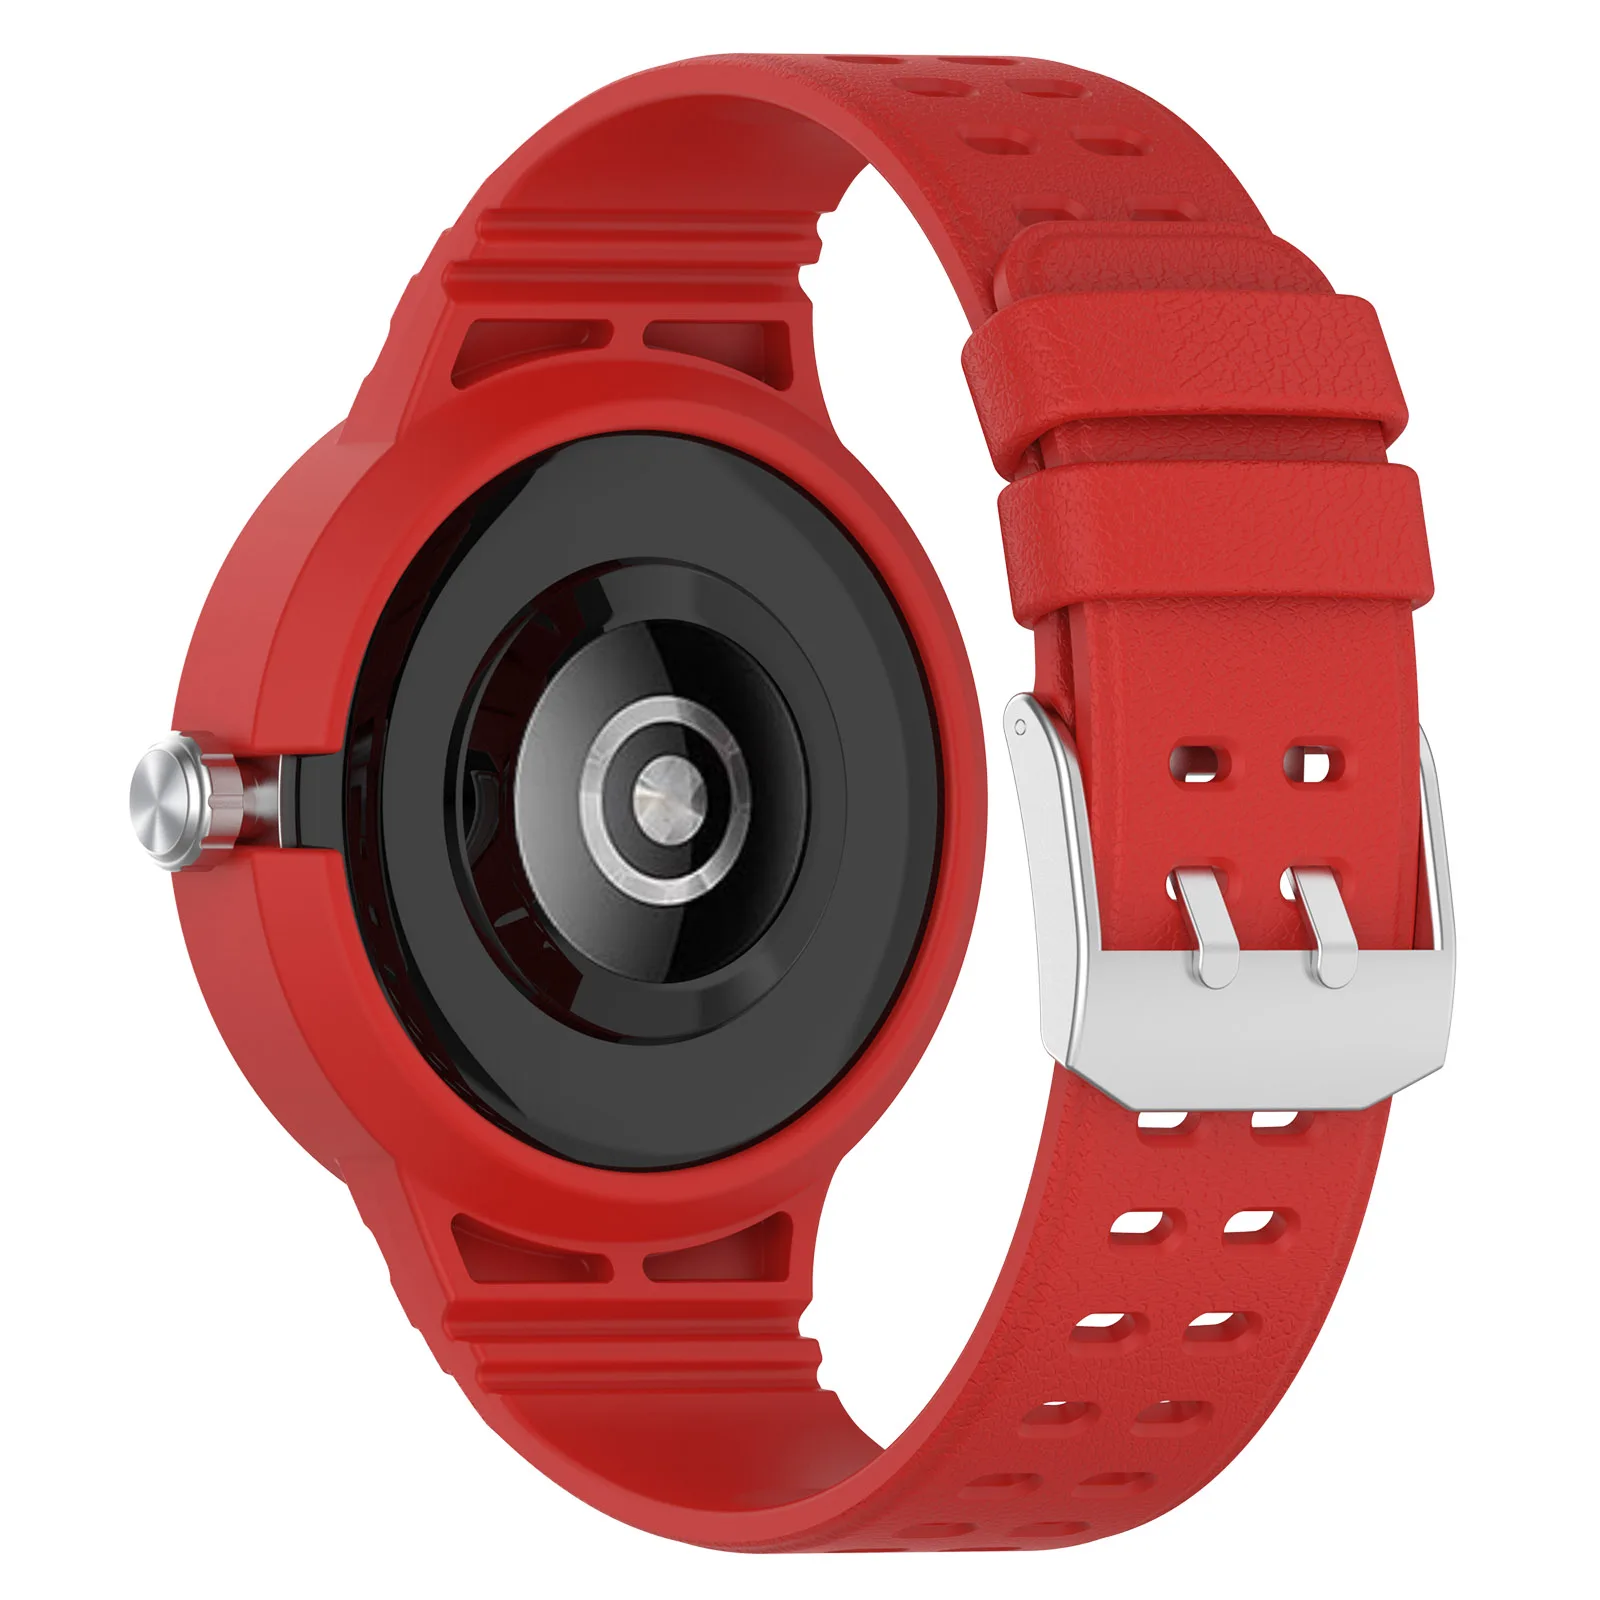 Heroland סיליקון רצועה עבור Huawei לצפות GT סייבר שעון חכם רצועת שעון+מעטפת הגנה חלופי צמיד אביזרי כיסוי